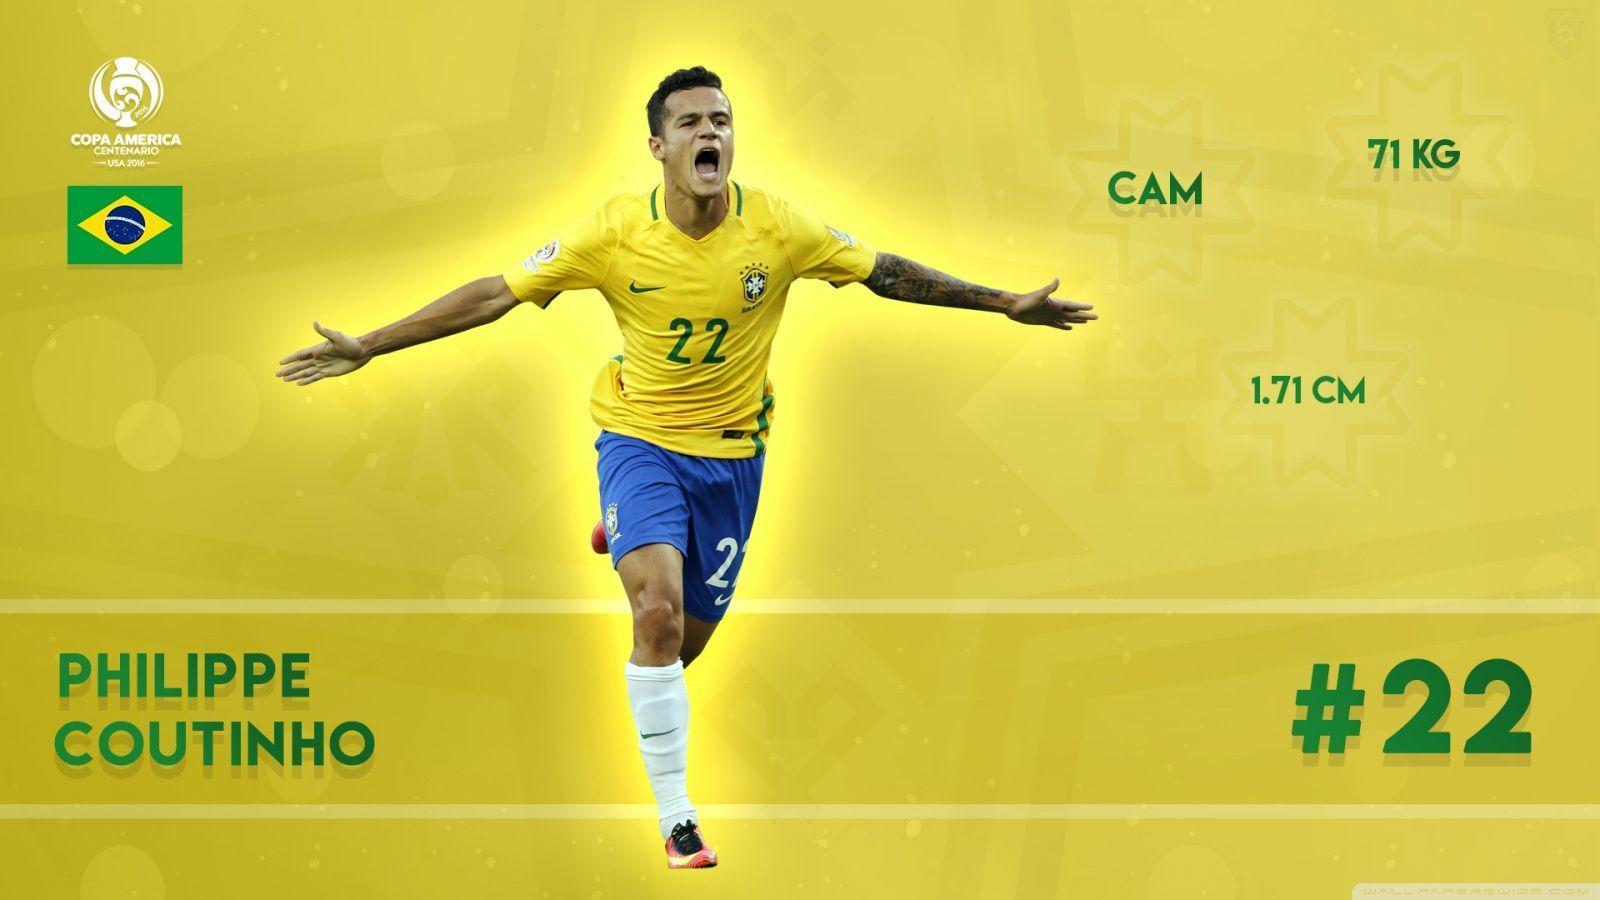 Copa America Coutinho HD desktop wallpaper, High